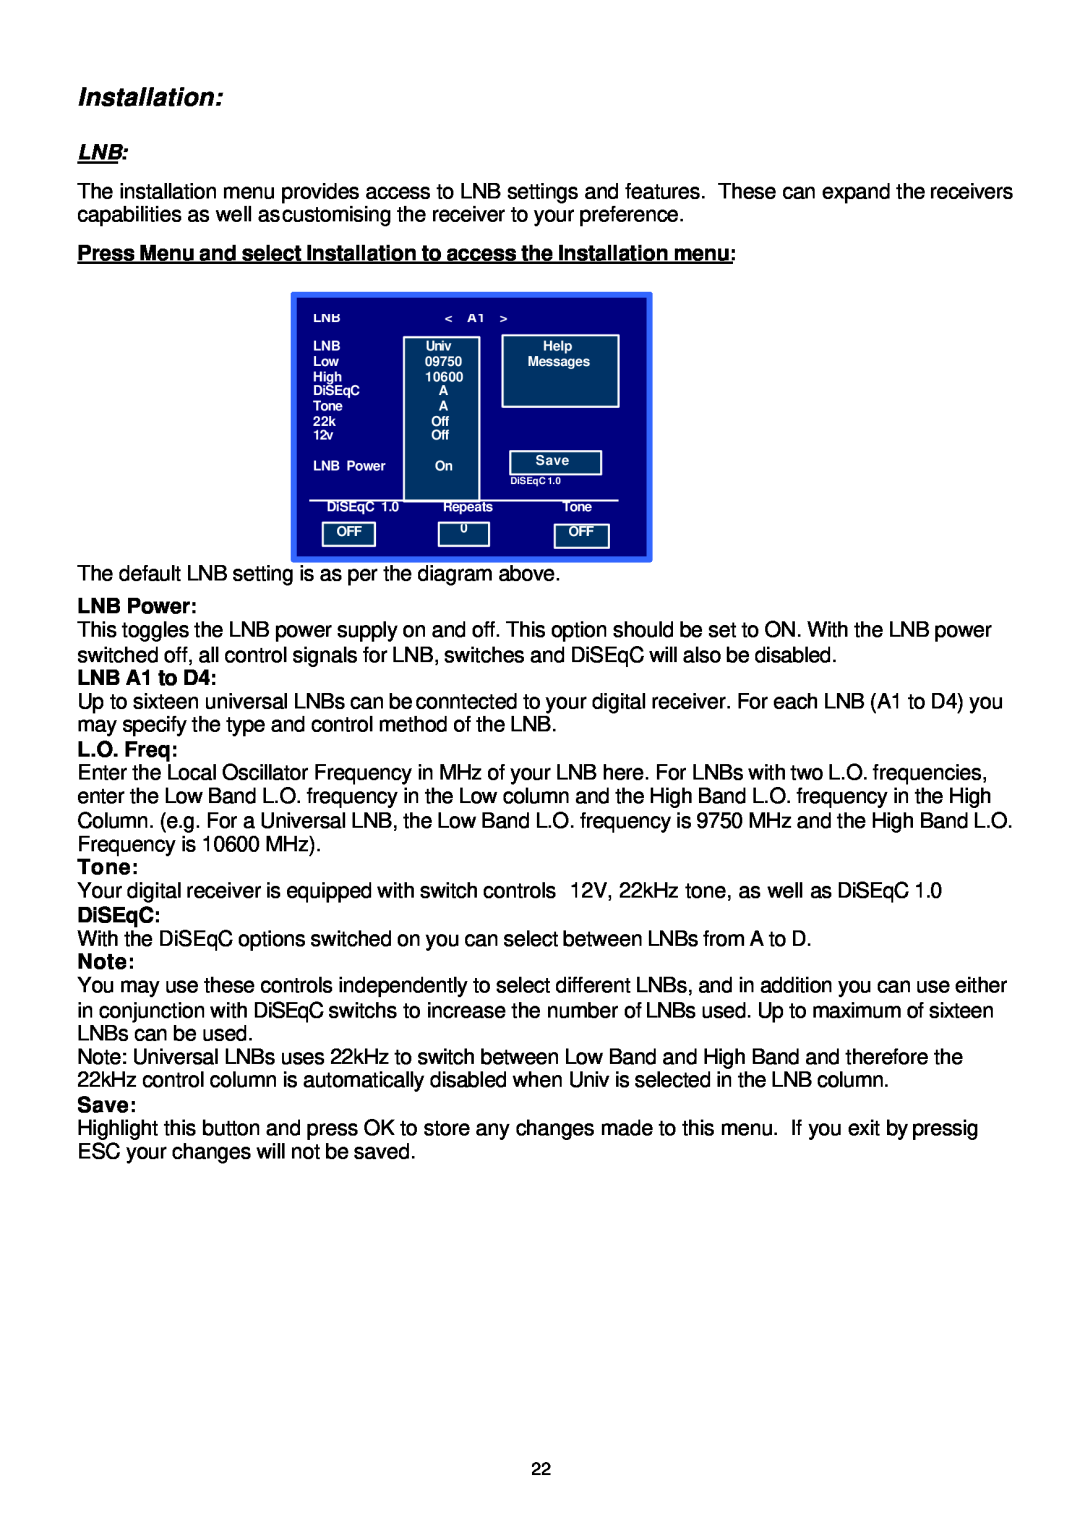 Samsung SADPCI-202 instruction manual Installation, LNB Power, LNB A1 to D4, L.O. Freq, Tone, DiSEqC, Save 